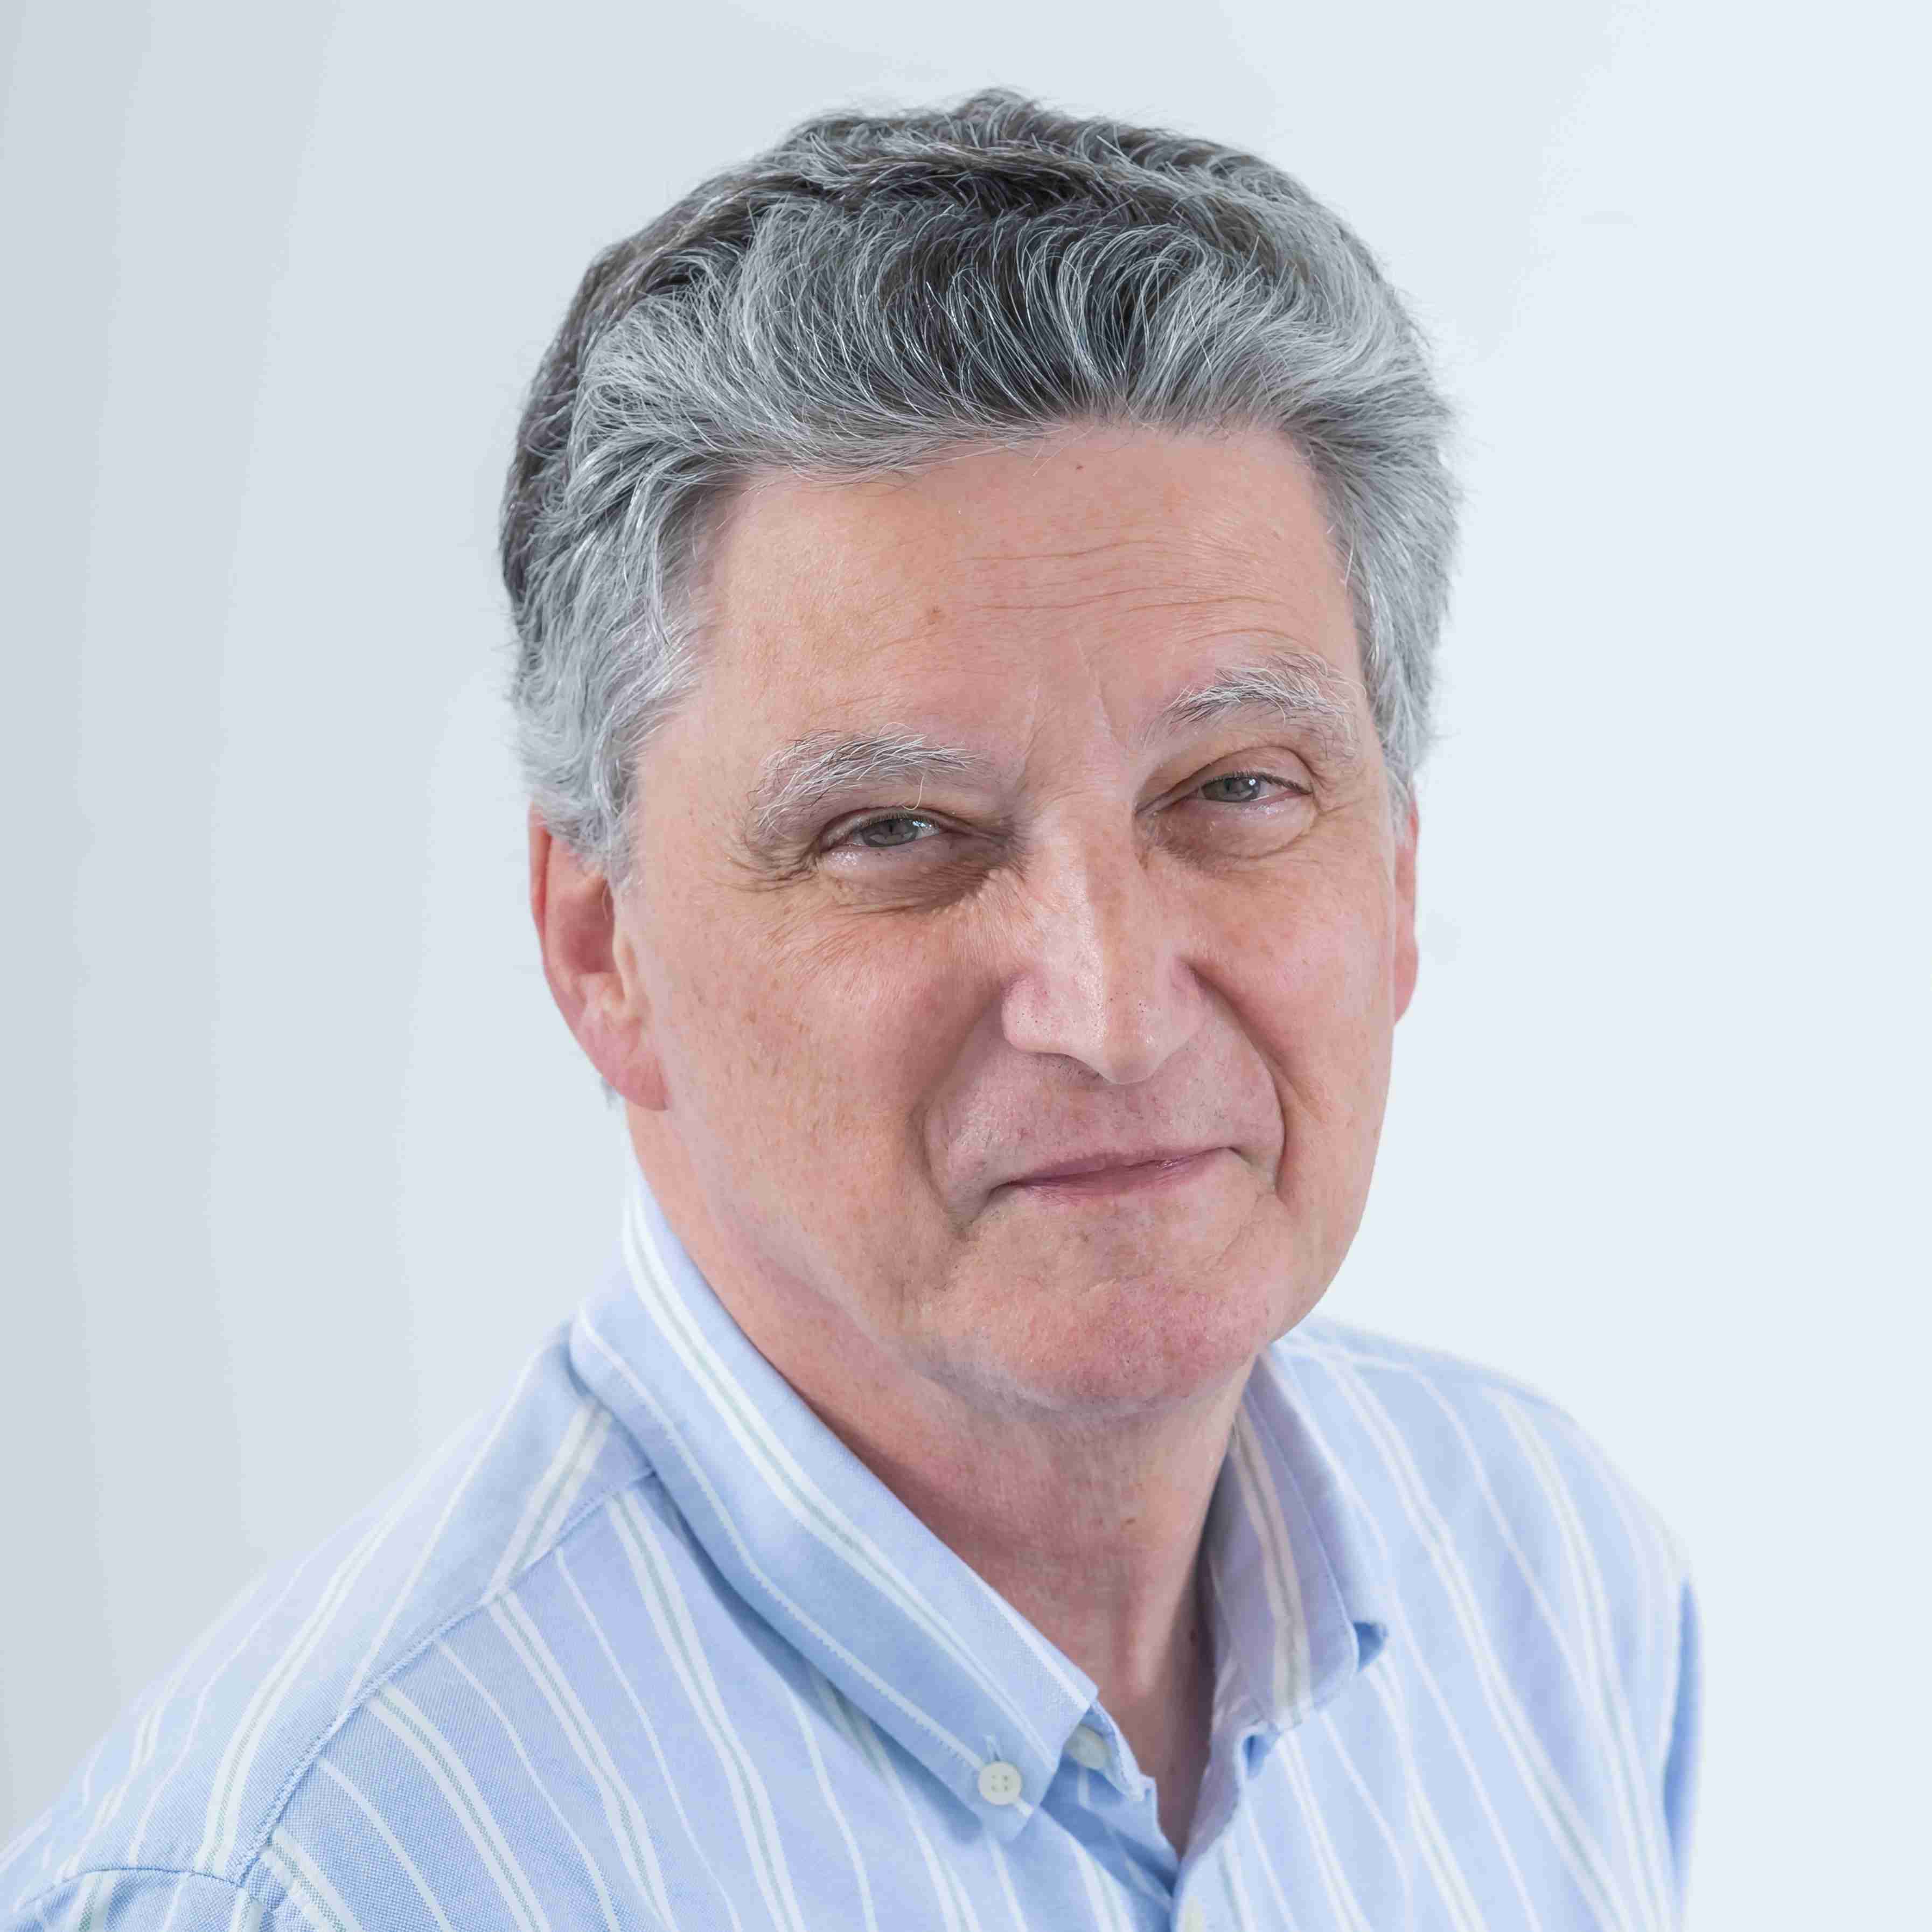 Profile image of Dr David Beech